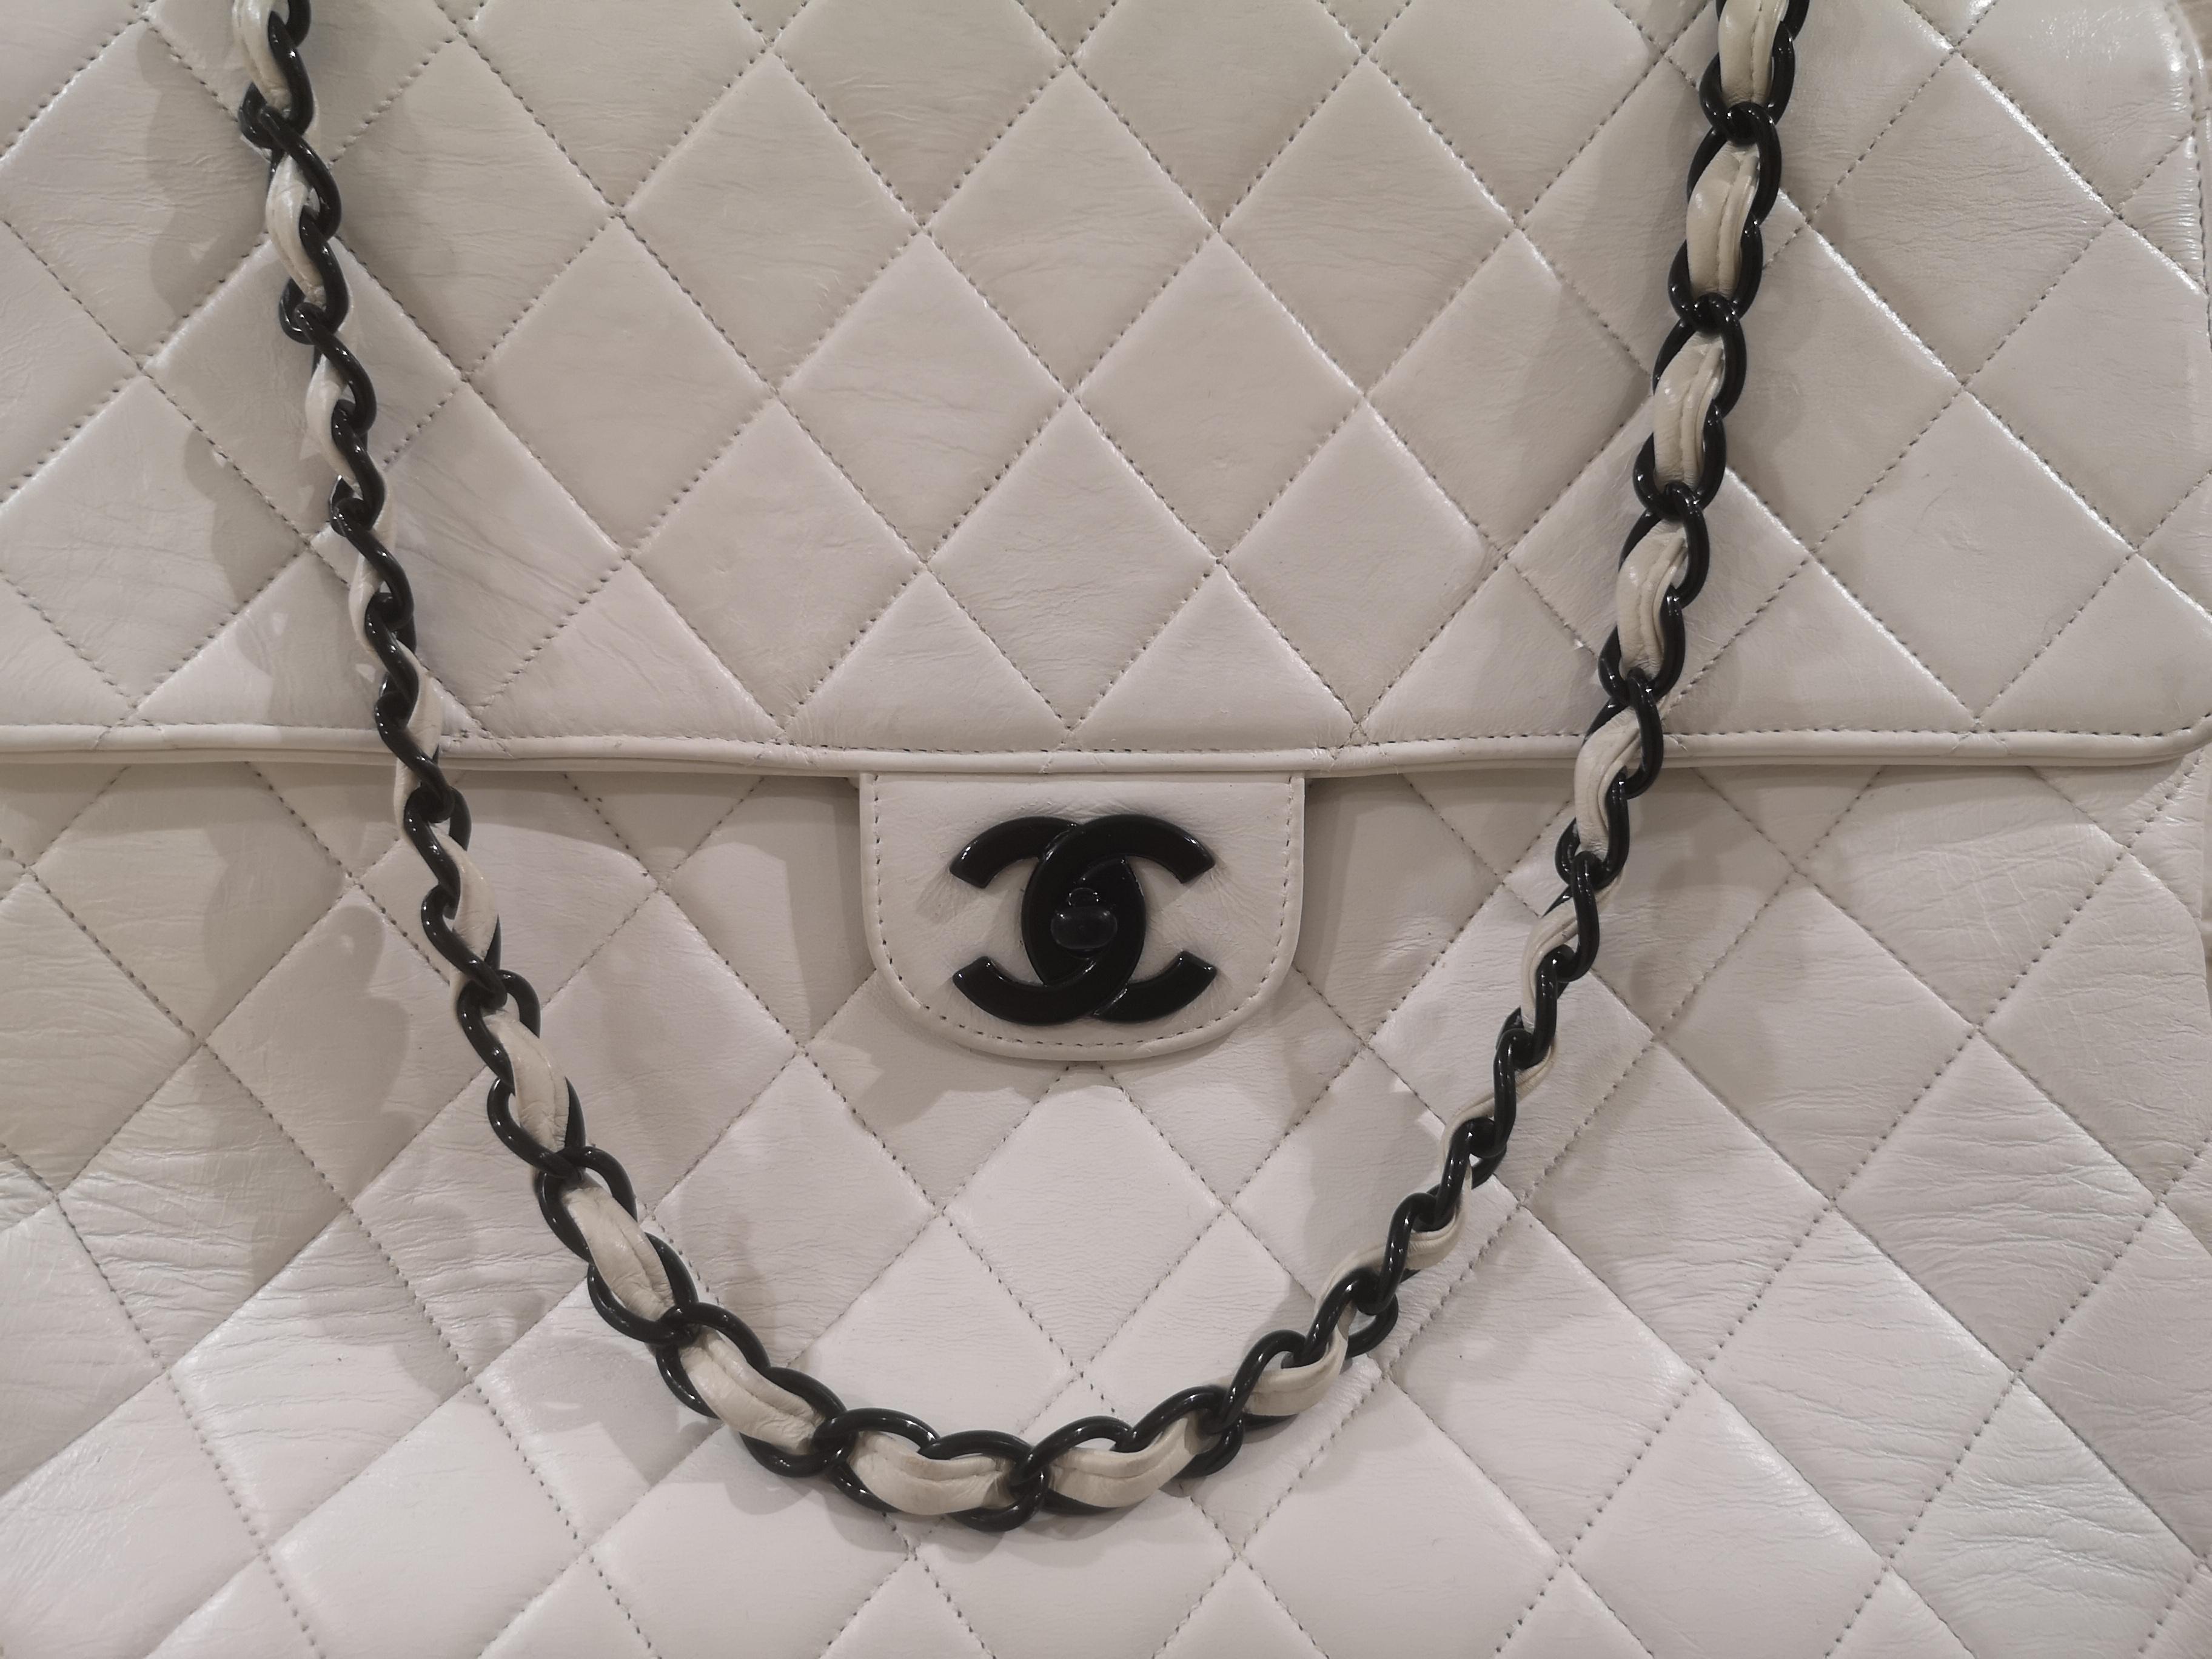 Chanel white leather black hardwared CC shoulder bag
Measurements: 33 x 26 cm
depth 13 cm